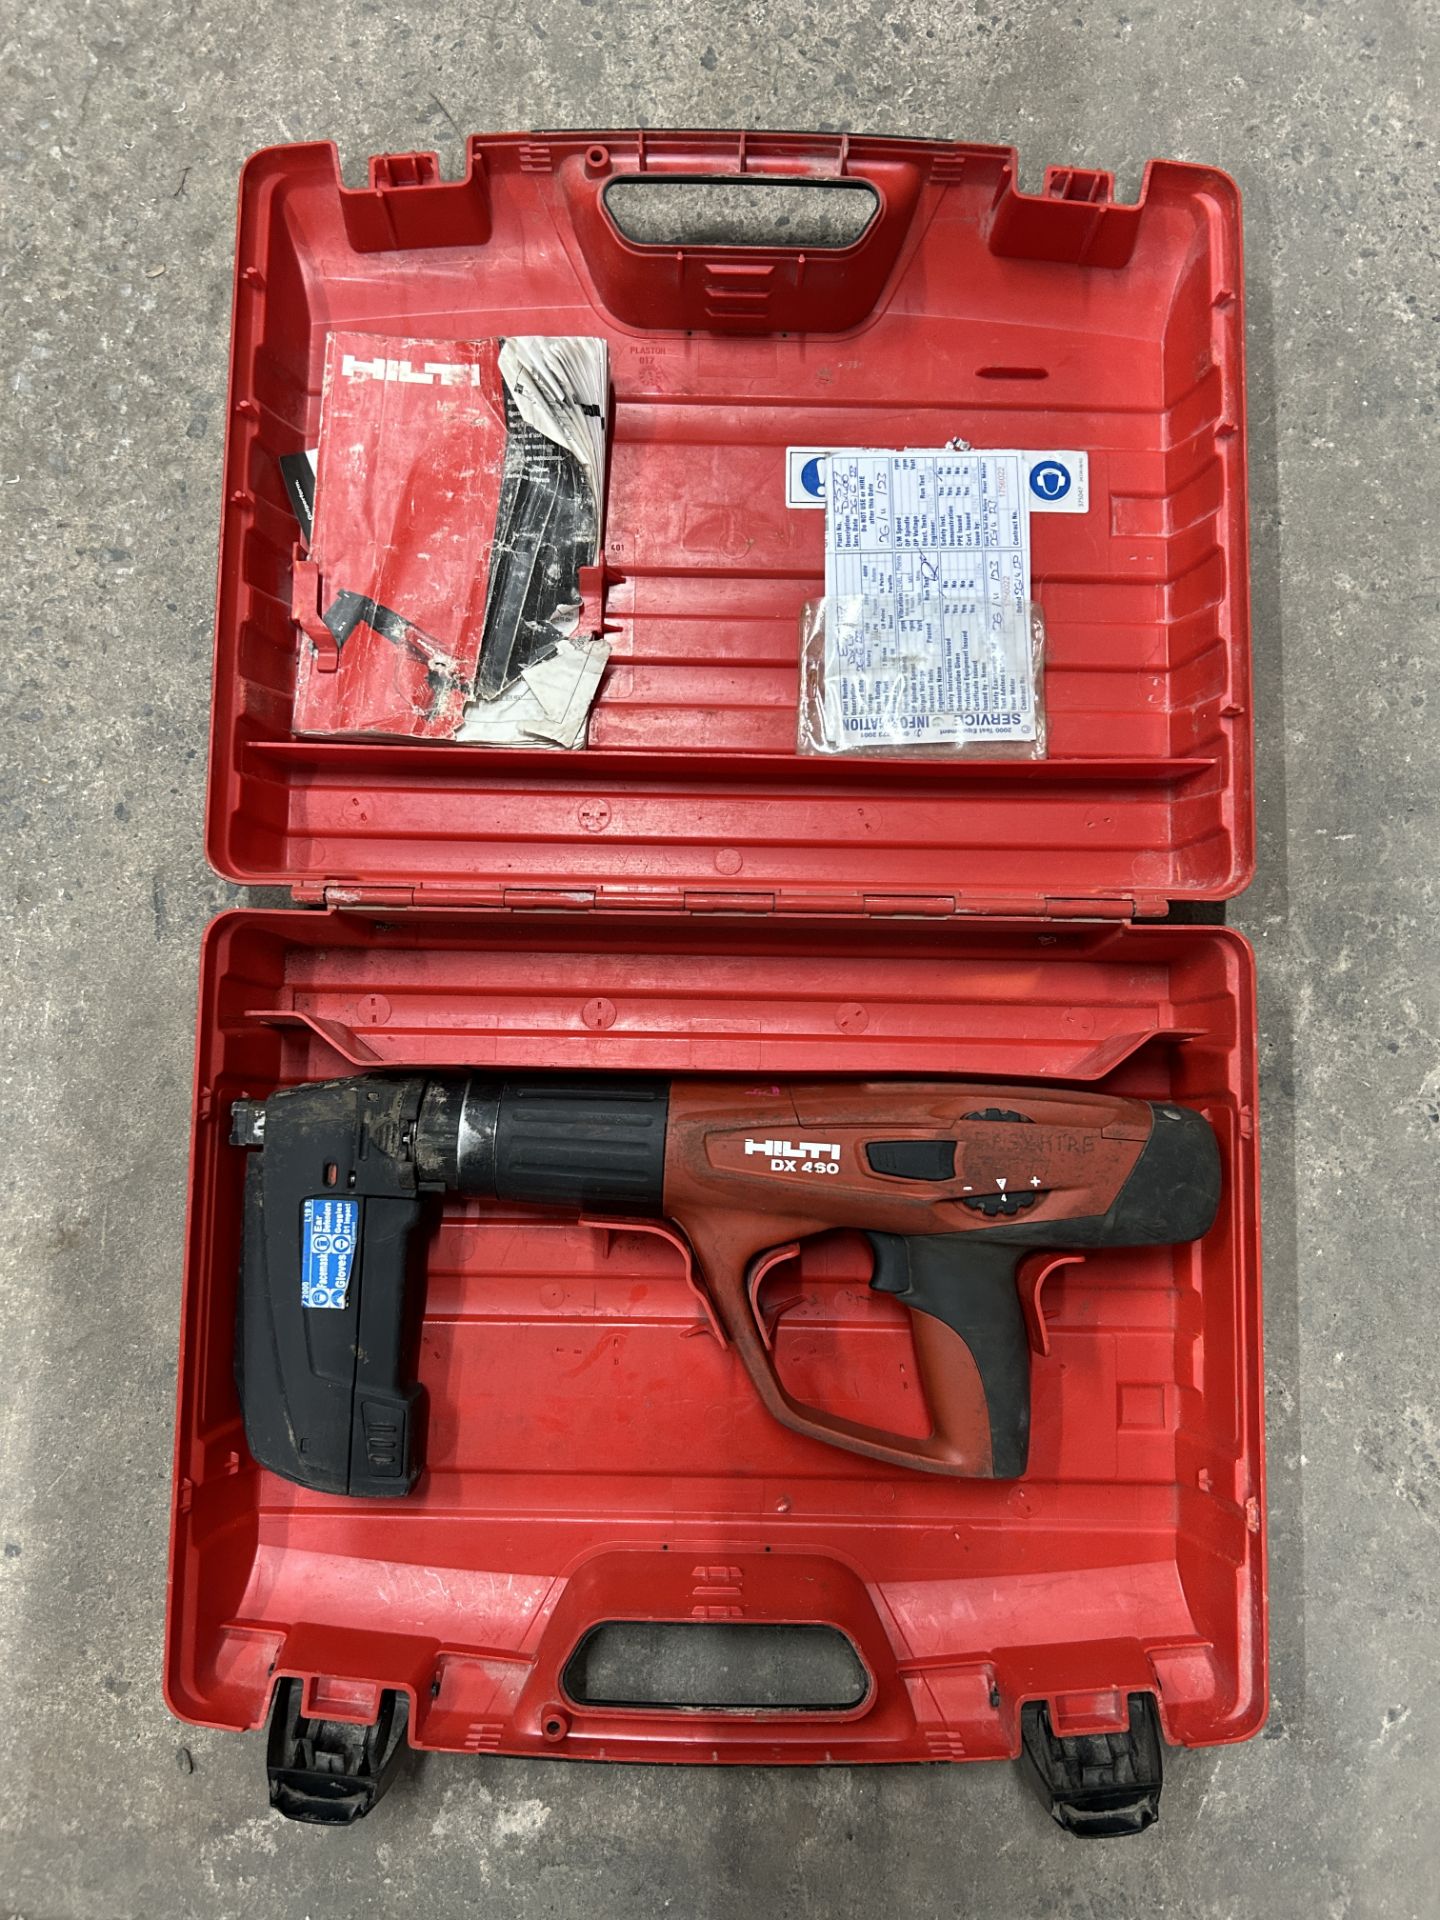 Hilti DX 460 Powder Actuated Nail Gun in Case